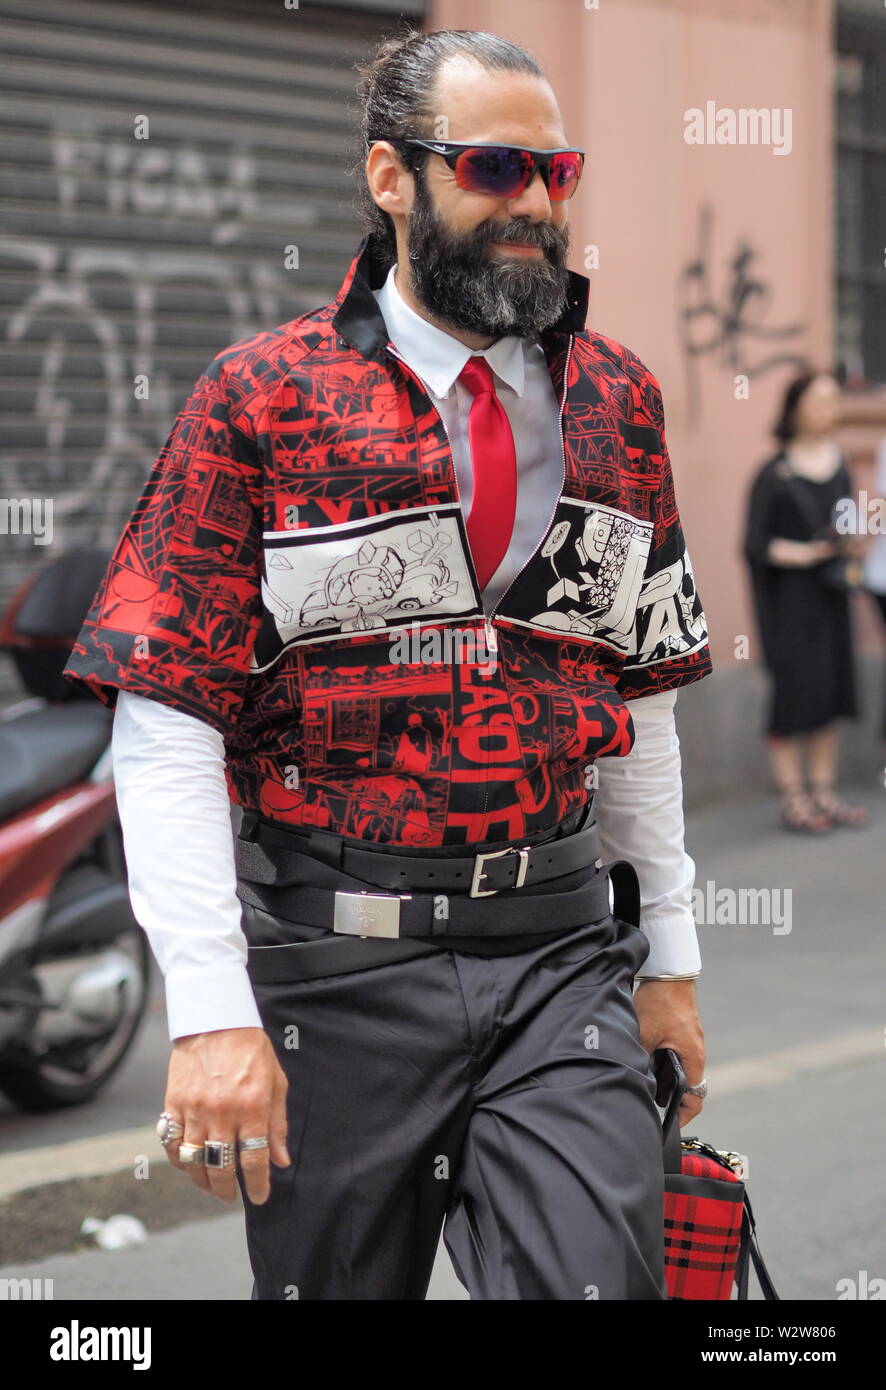 MILANO, Italien: 15. Juni 2019: Fashion Blogger street style Outfit nach Magliano fashion show während der Mailand Fashion Week Mann 2019/2020 Stockfoto